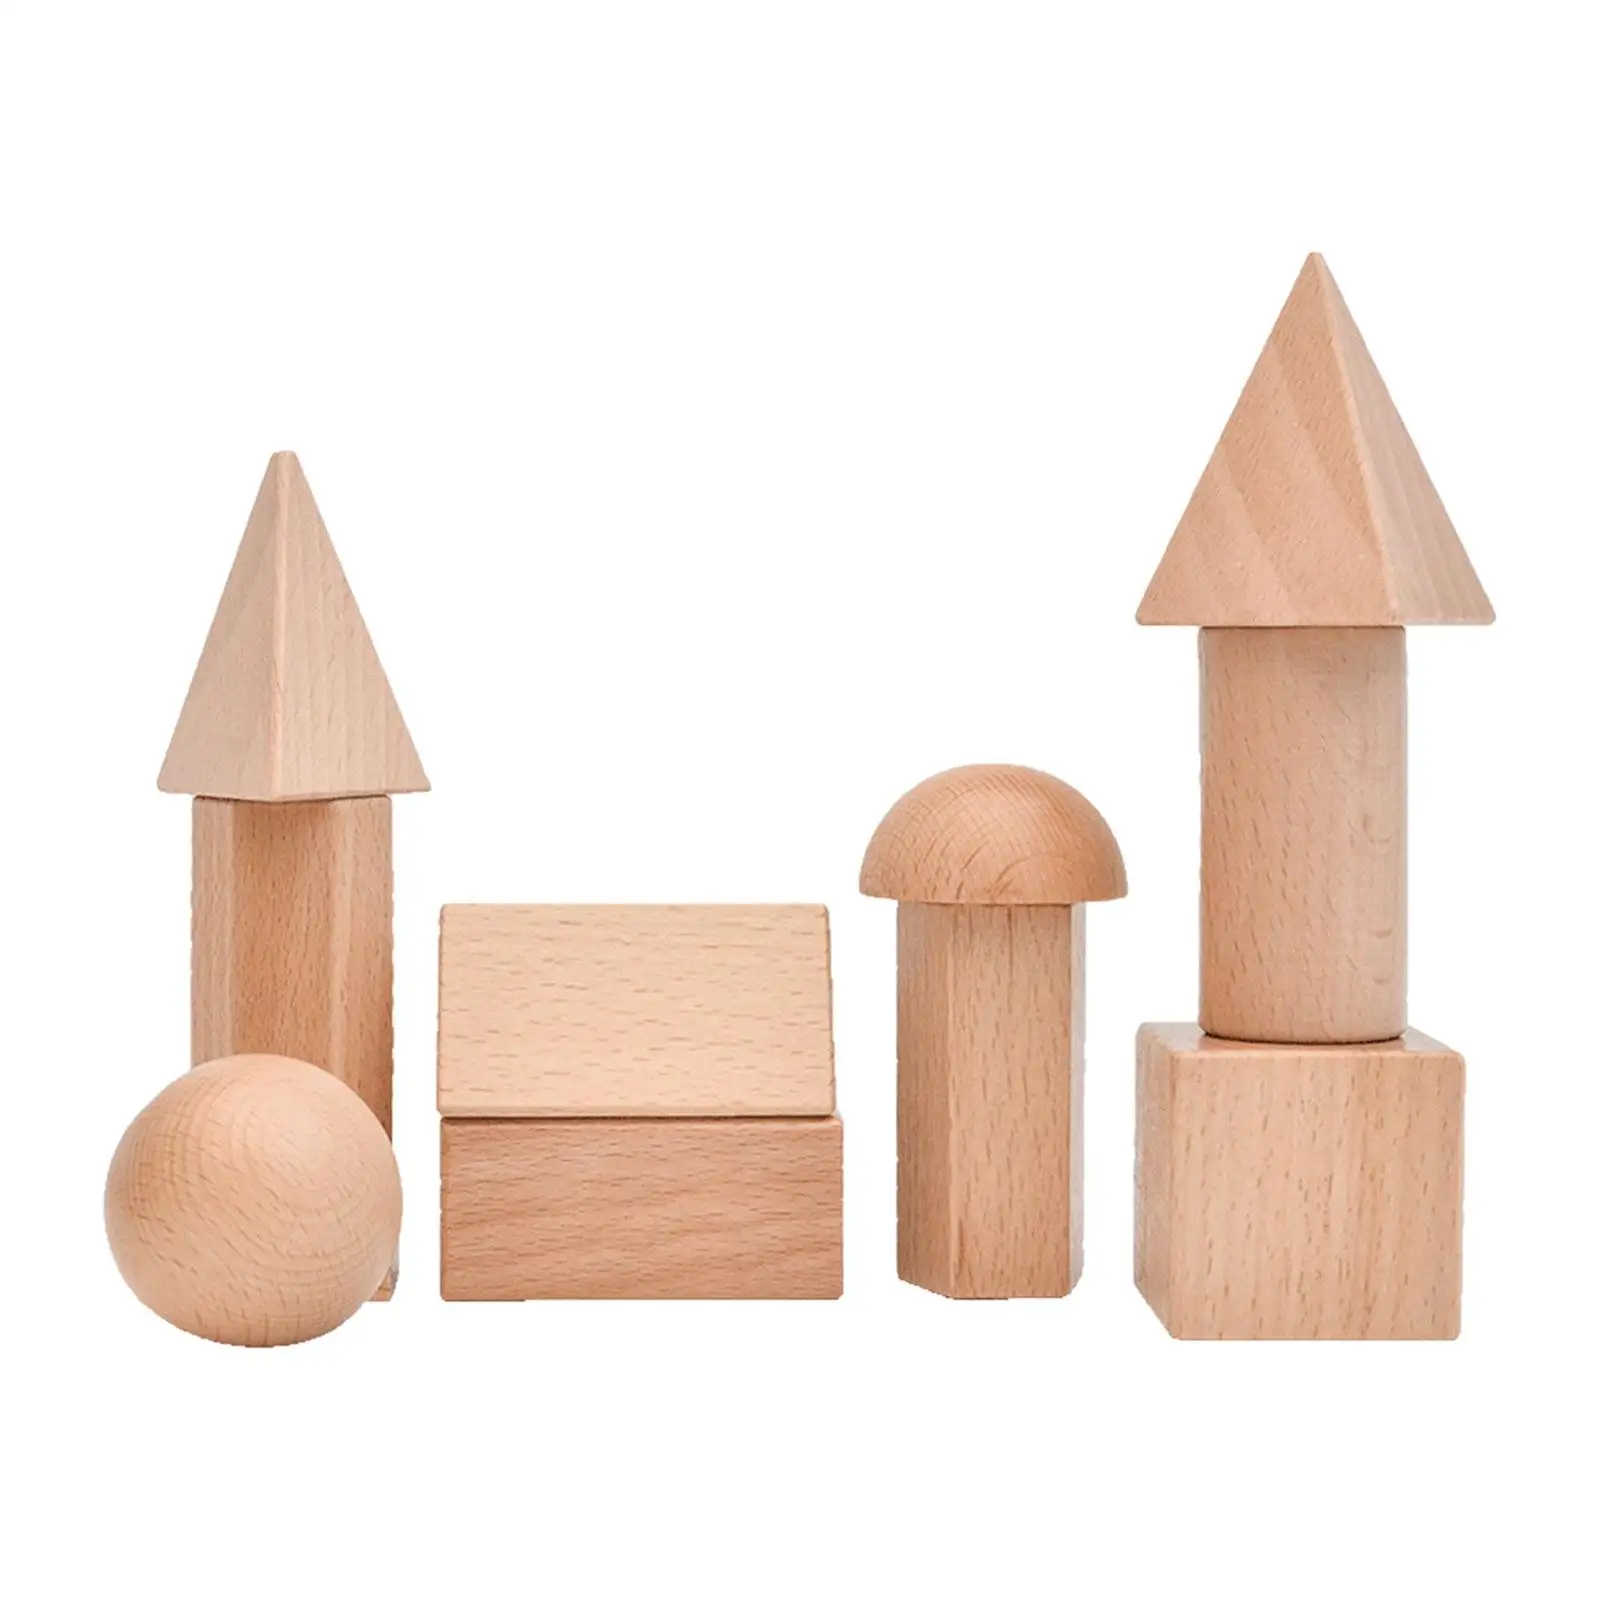 Wood Geometric Solid Blocks Puzzle Toy Teaching Aid for Home Preschool Kids